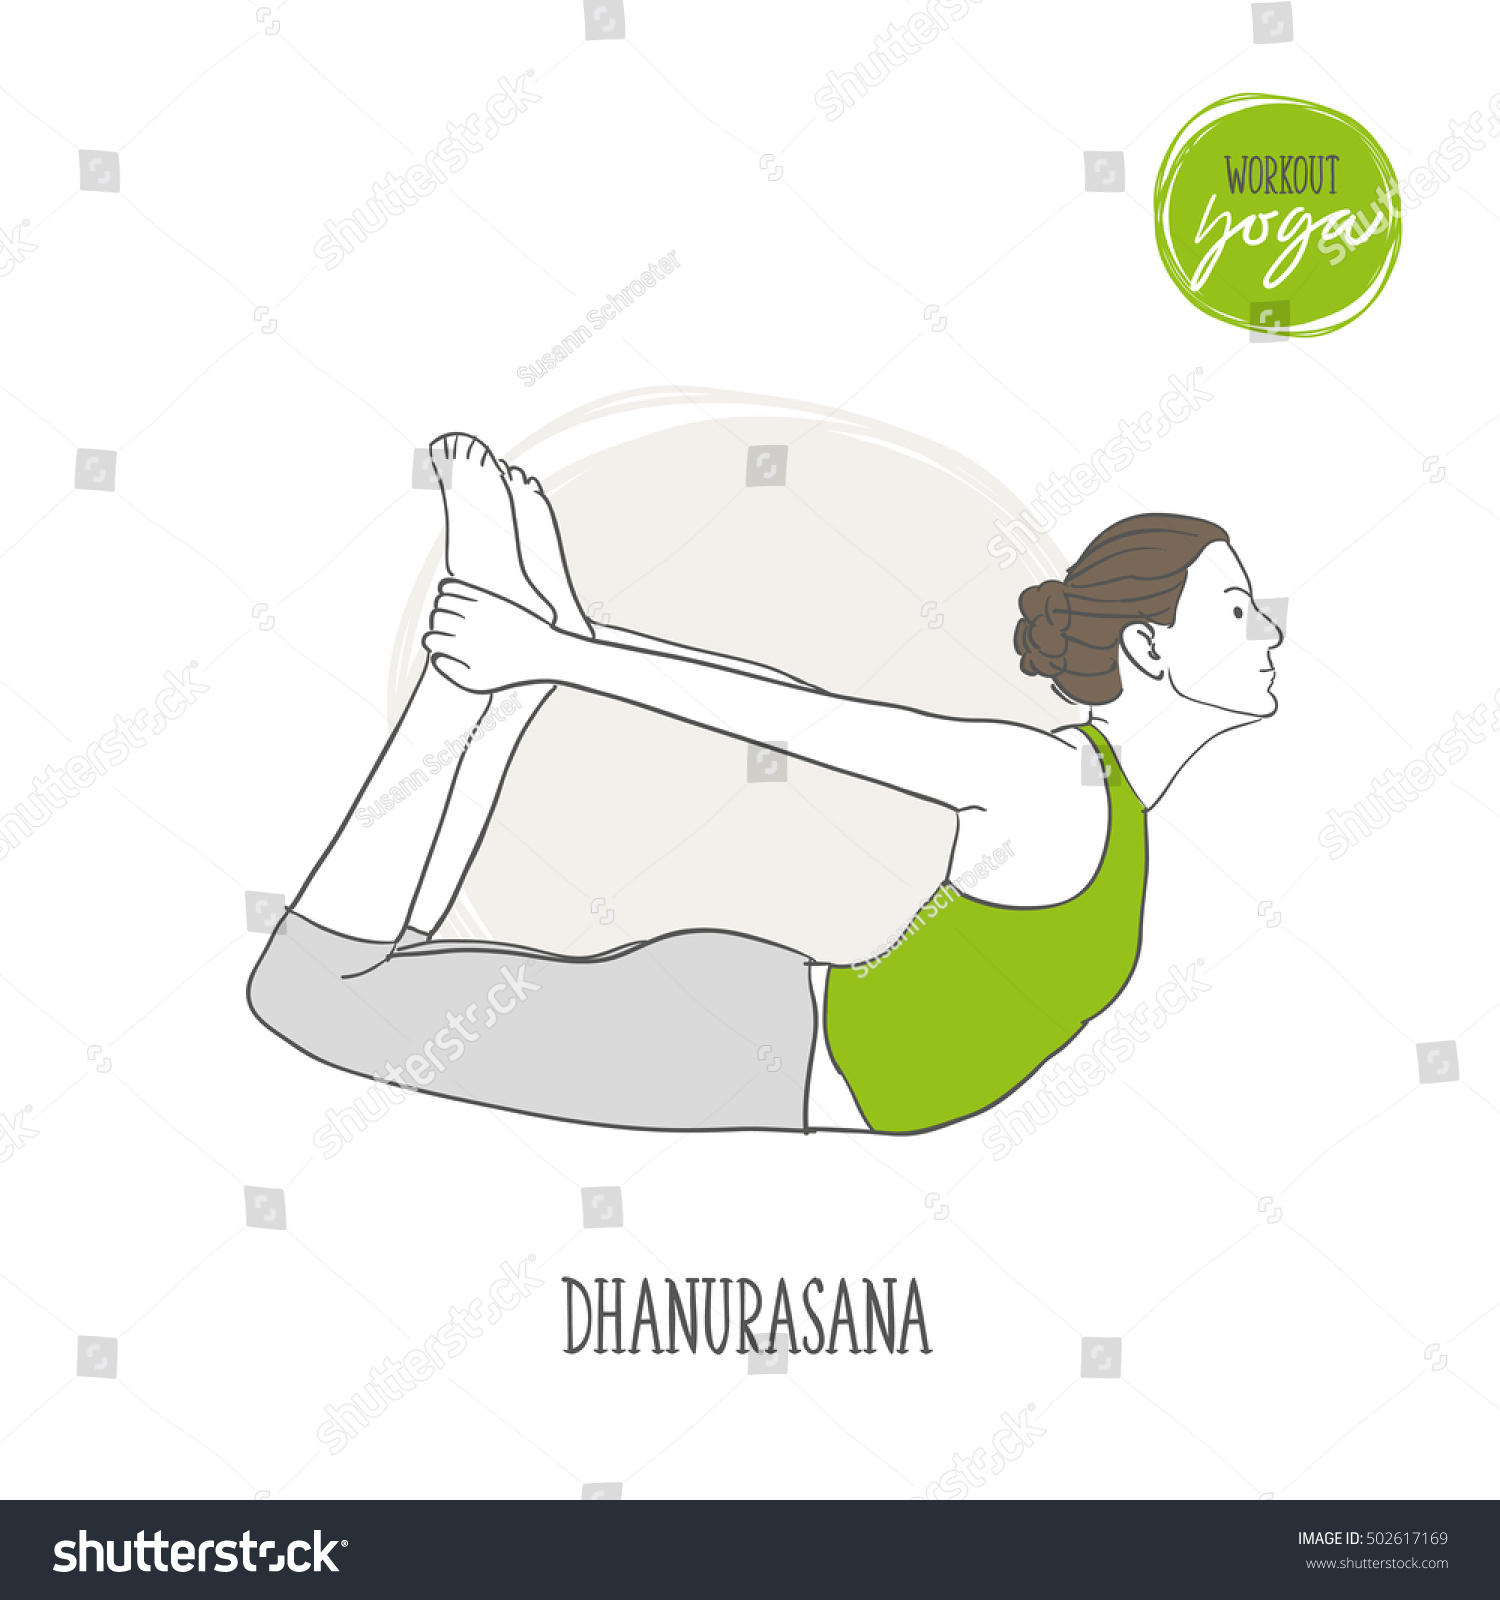 Doodle Set Yoga Workout Dhanurasana Sport Stock Vector Royalty Free 502617169